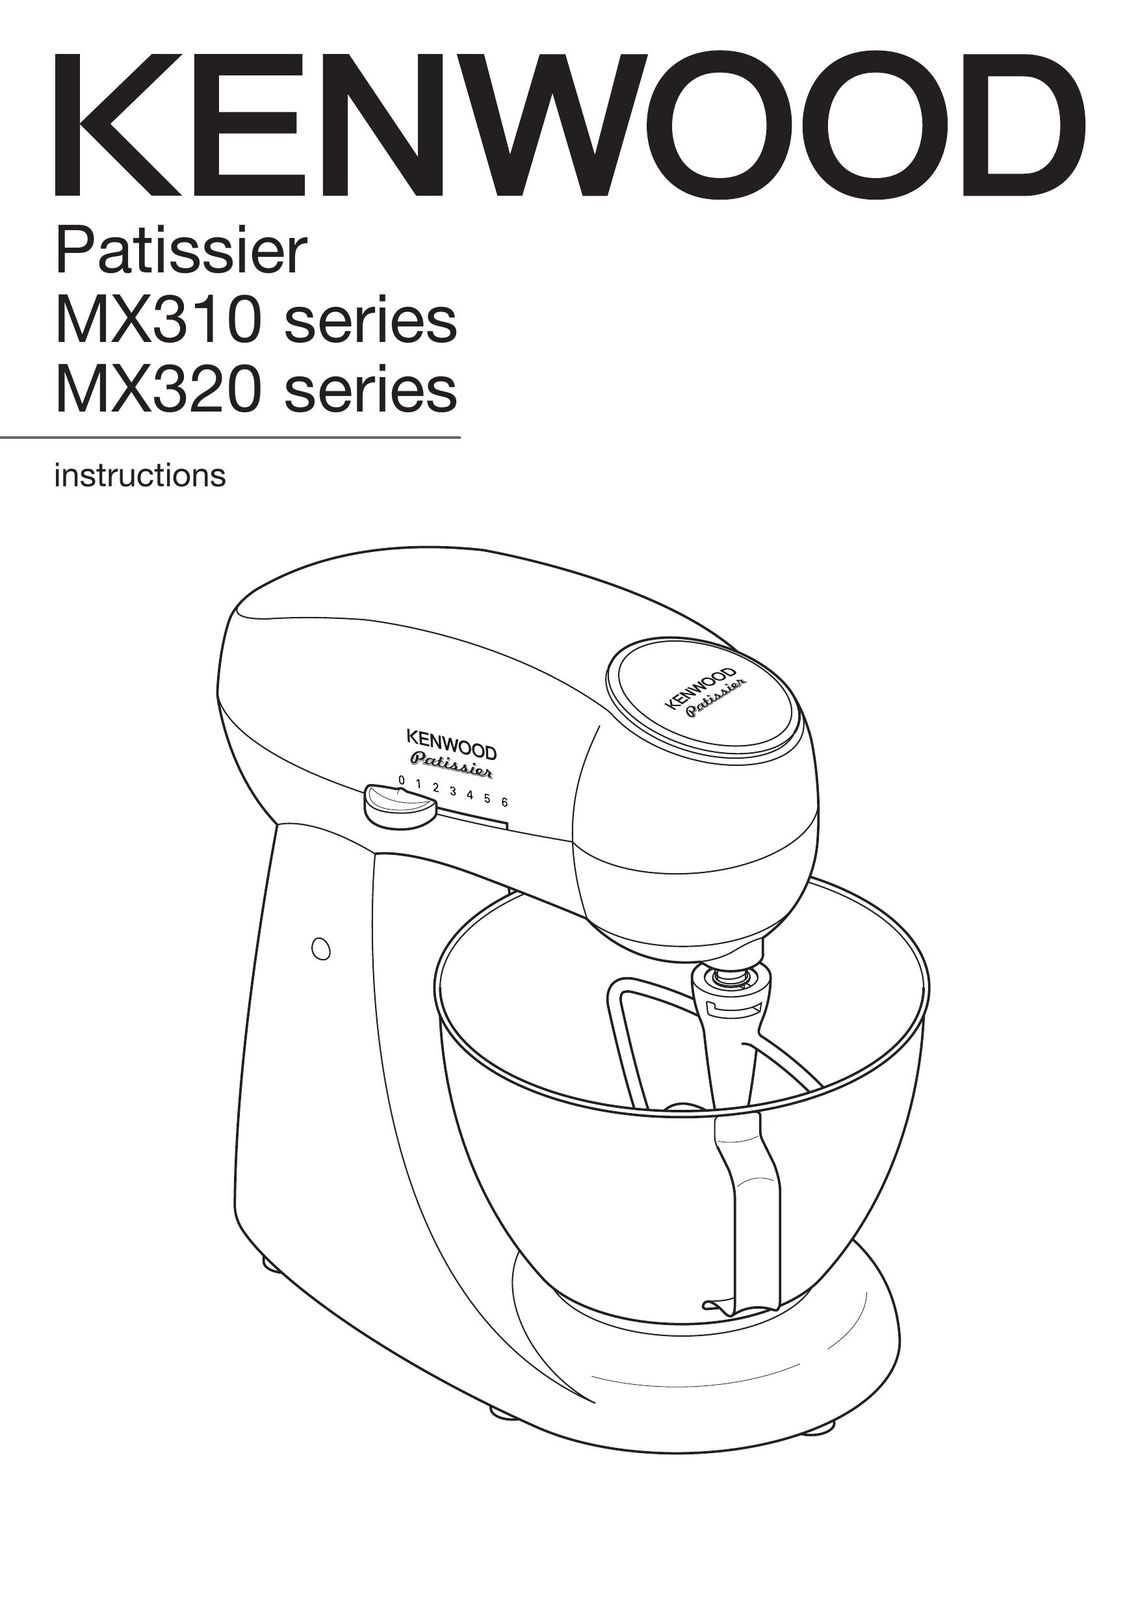 Kenwood MX320 series Mixer User Manual